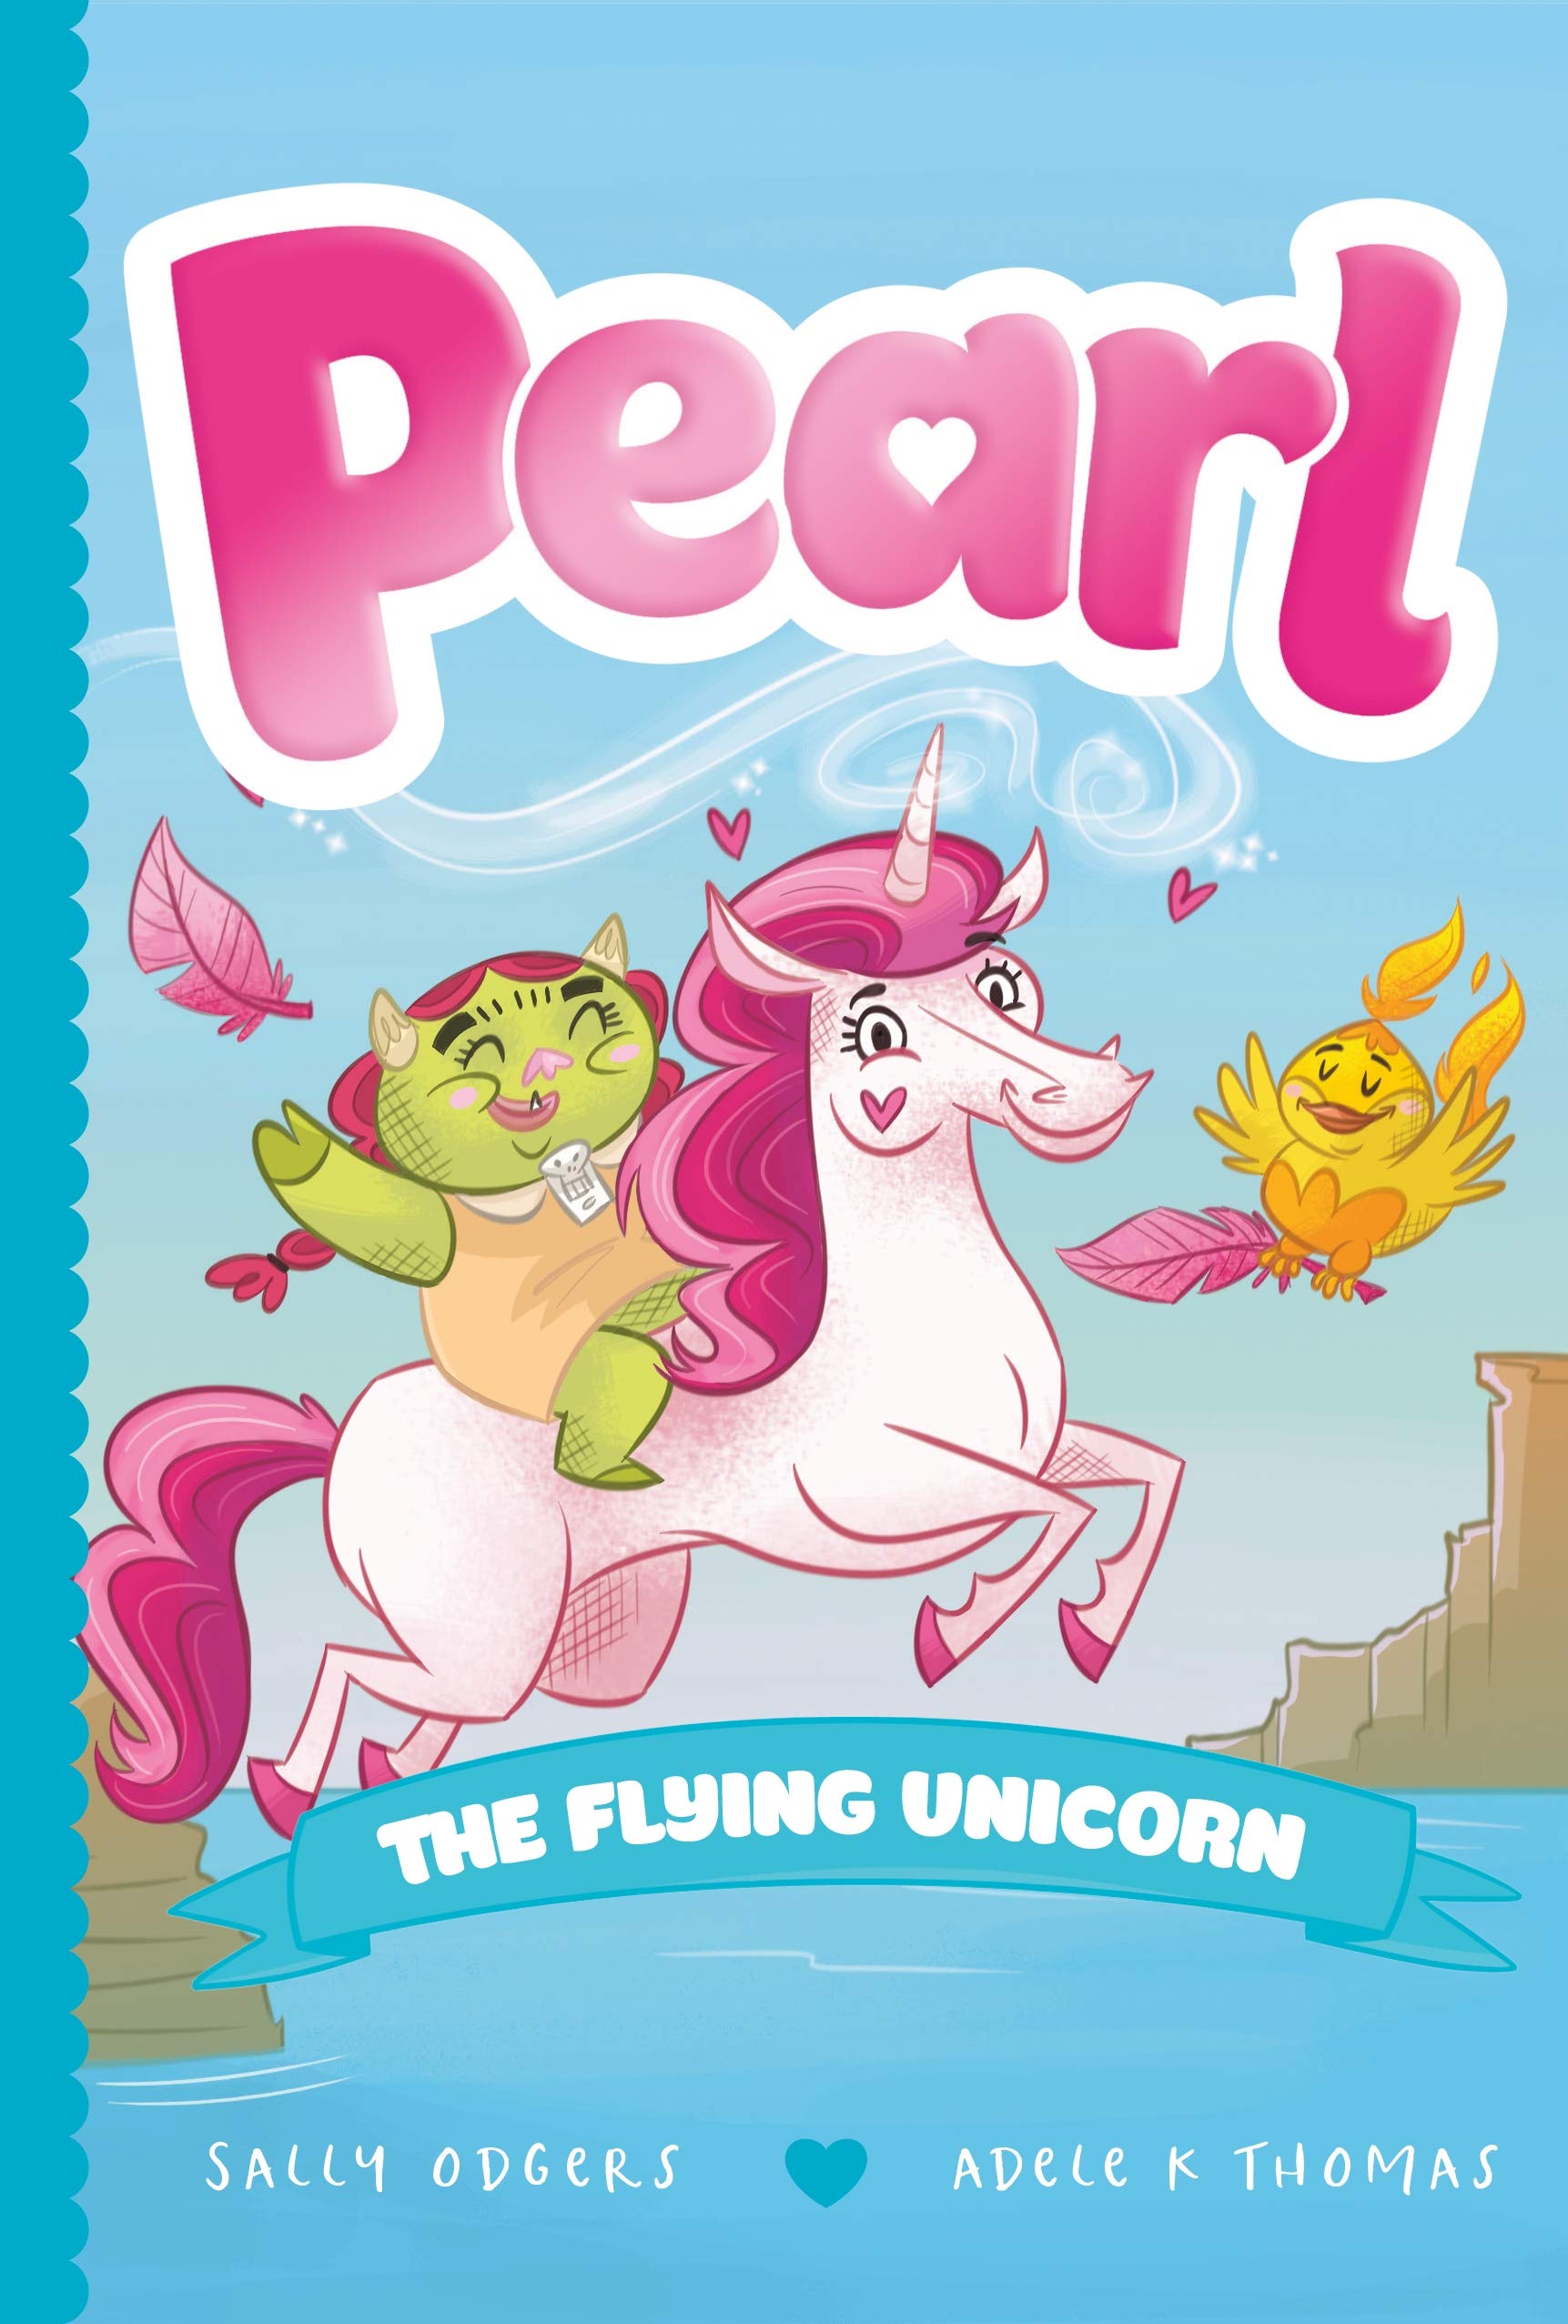 Pearl the Flying Unicorn (Pearl the Magical Unicorn)